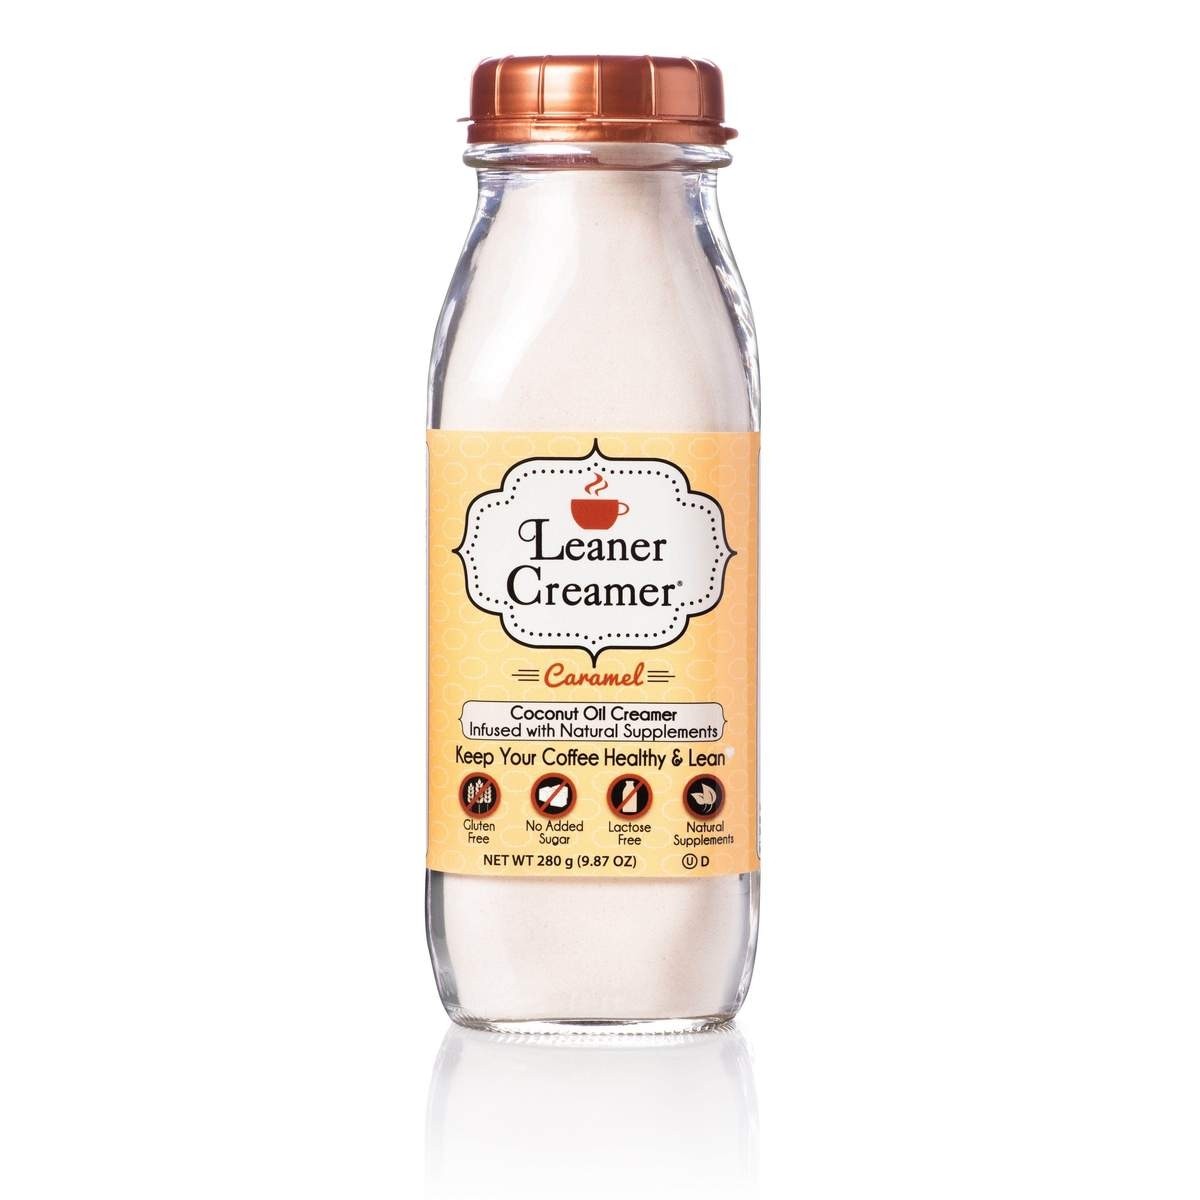 Leaner Creamer 美國椰子油焦糖非乳咖啡素奶粉 | ORIGINAL CARAMEL COCONUT OIL CREAMER